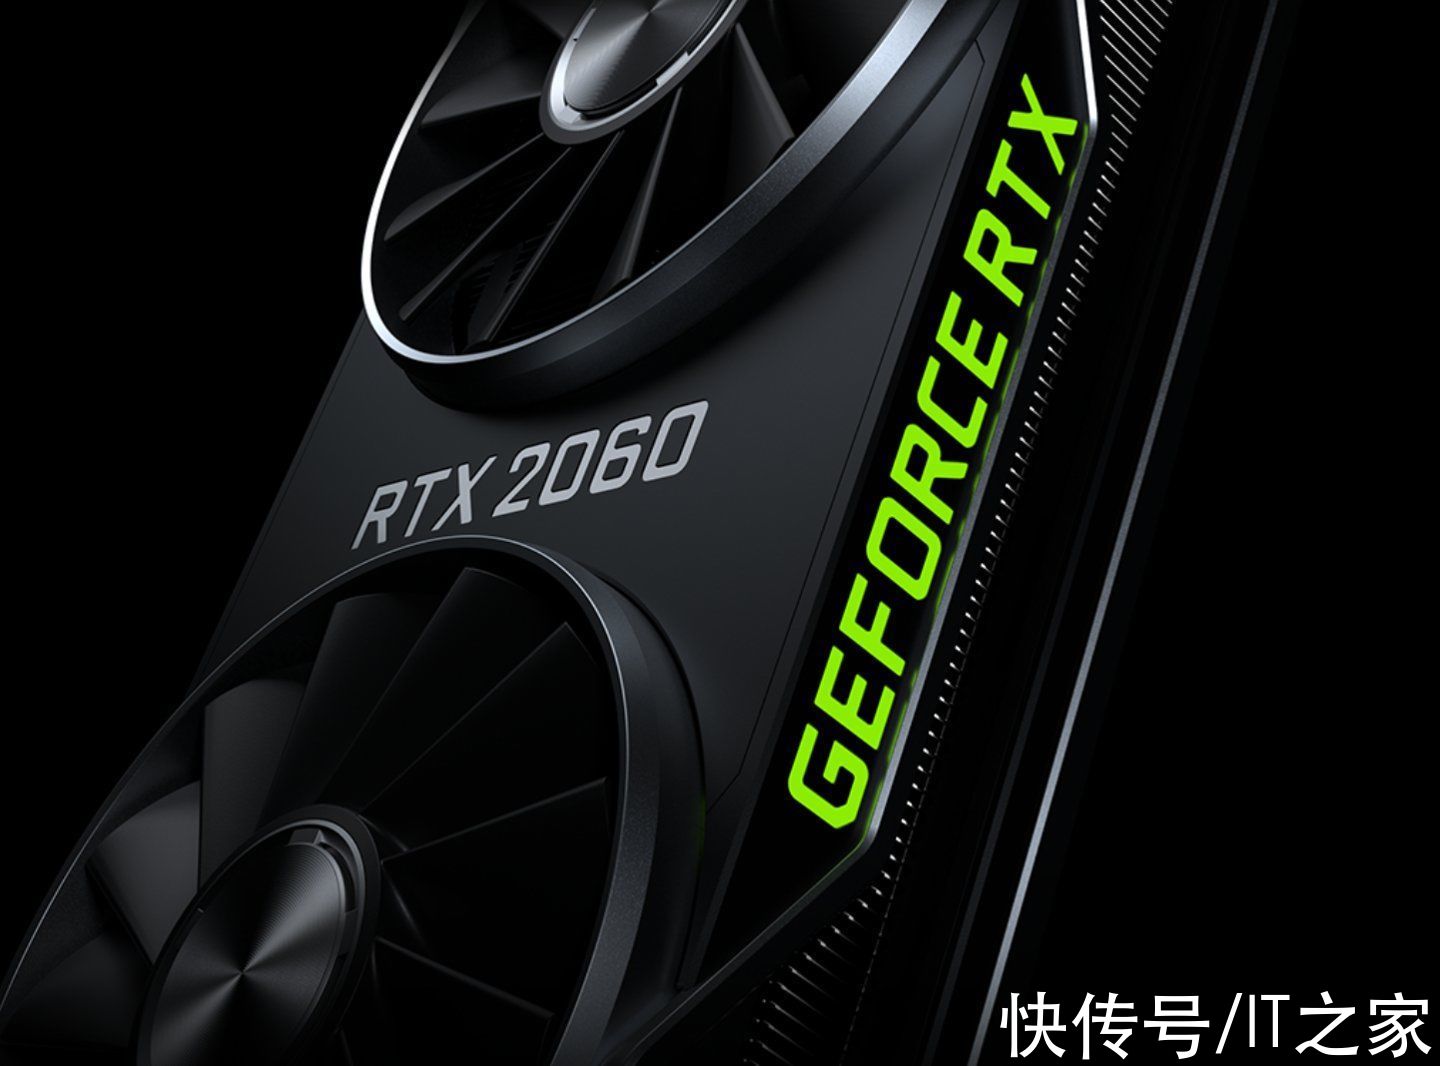 tgp|消息称英伟达 RTX2060 12G 市场价 3999 元，12 月 7 日发布